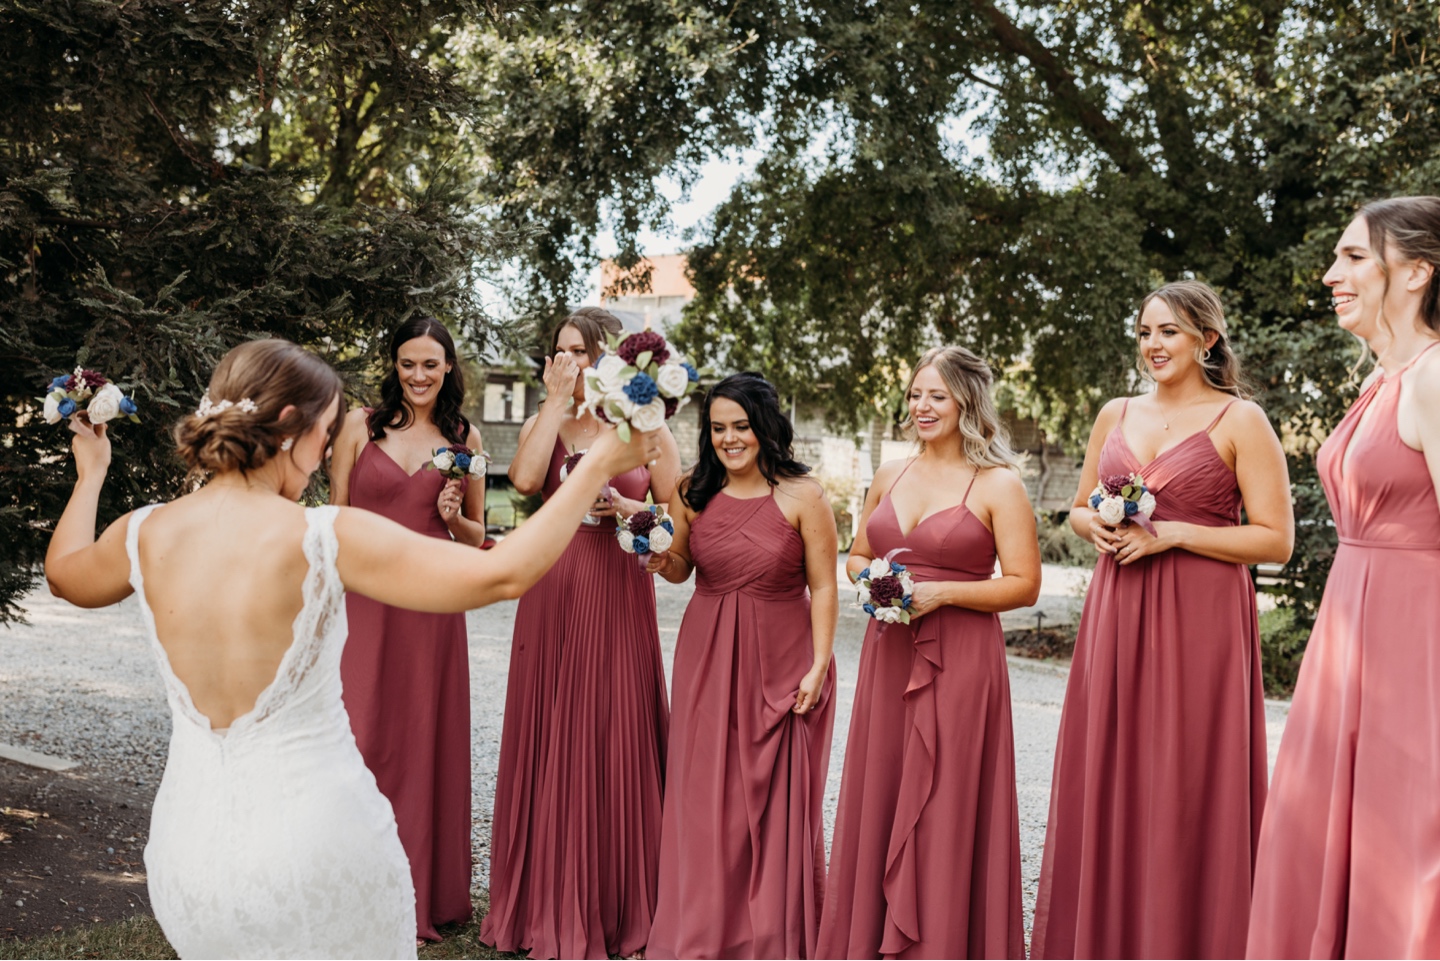 Bride shows off her wedding dress to her bridesmaids all wearing dark pink bridesmaids dresses. Wedding photography in Sacramento by Liz Koston.